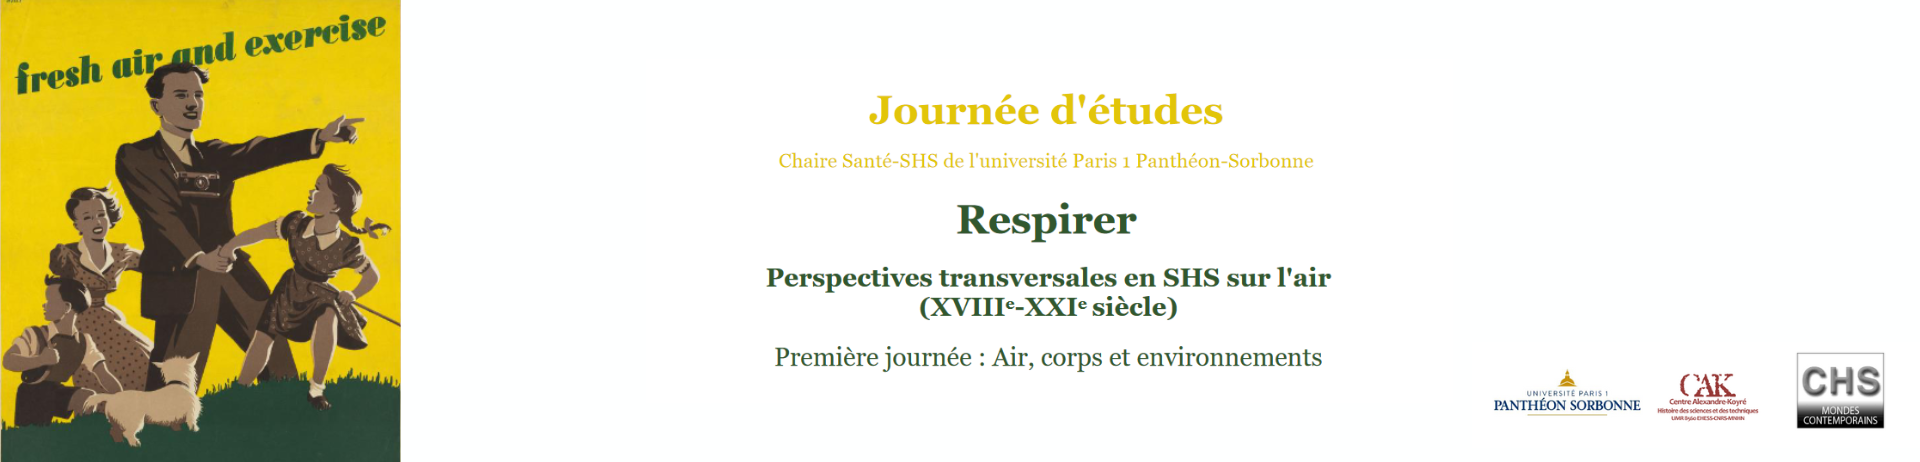 Respirer Perspectives transversales en SHS sur l'air (XVIIIe-XXIe siècle)